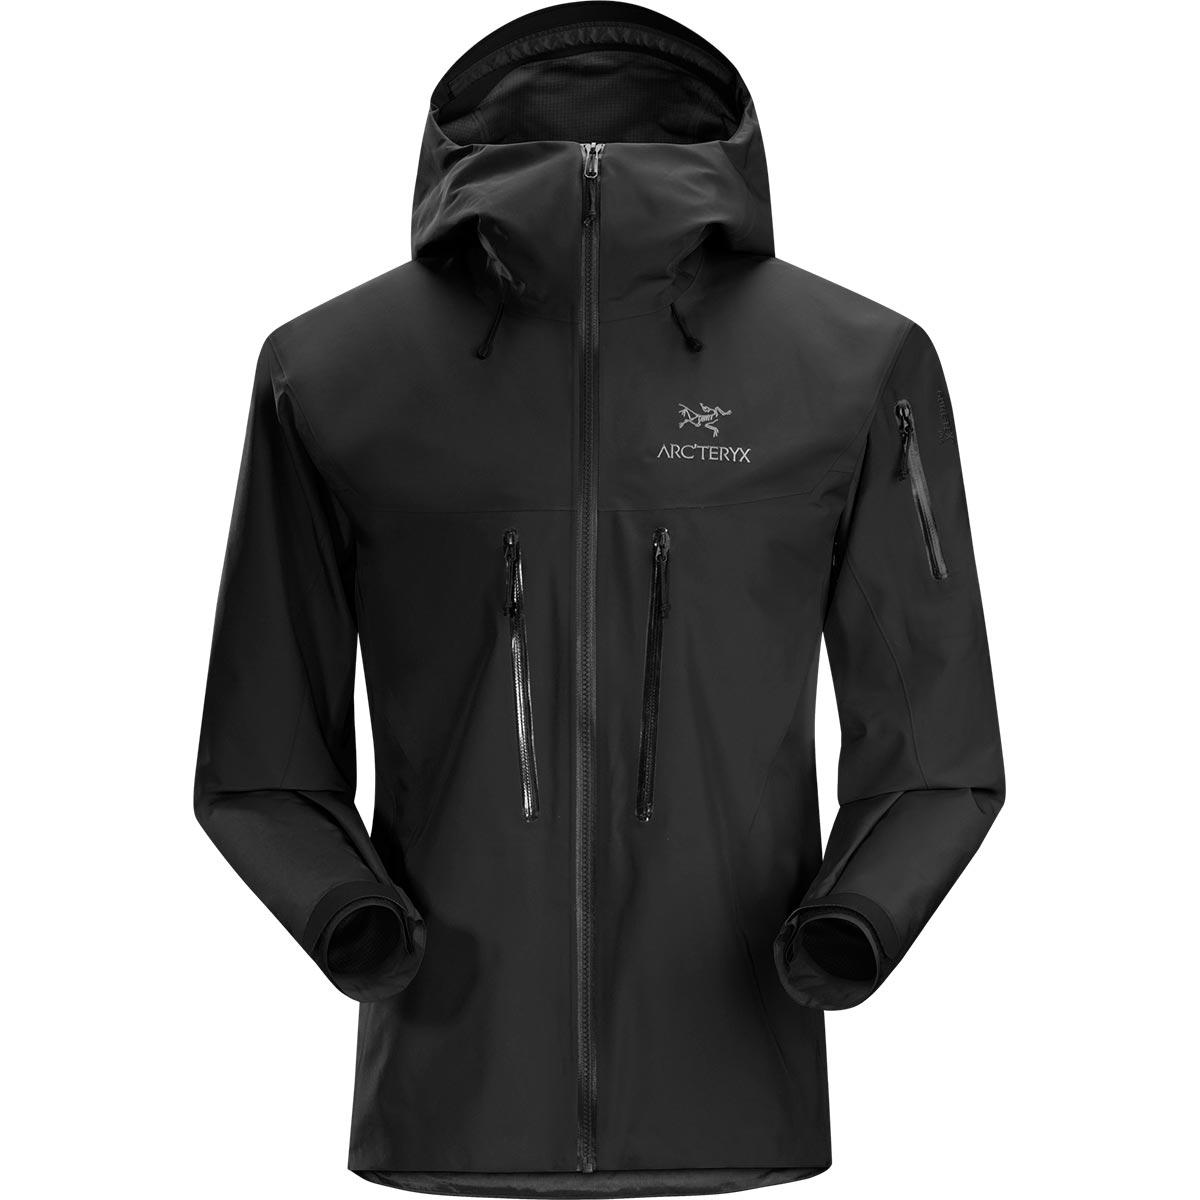 Arc'teryx Alpha SV Jacket, men's, discontinued Spring 2019 colors (free ...